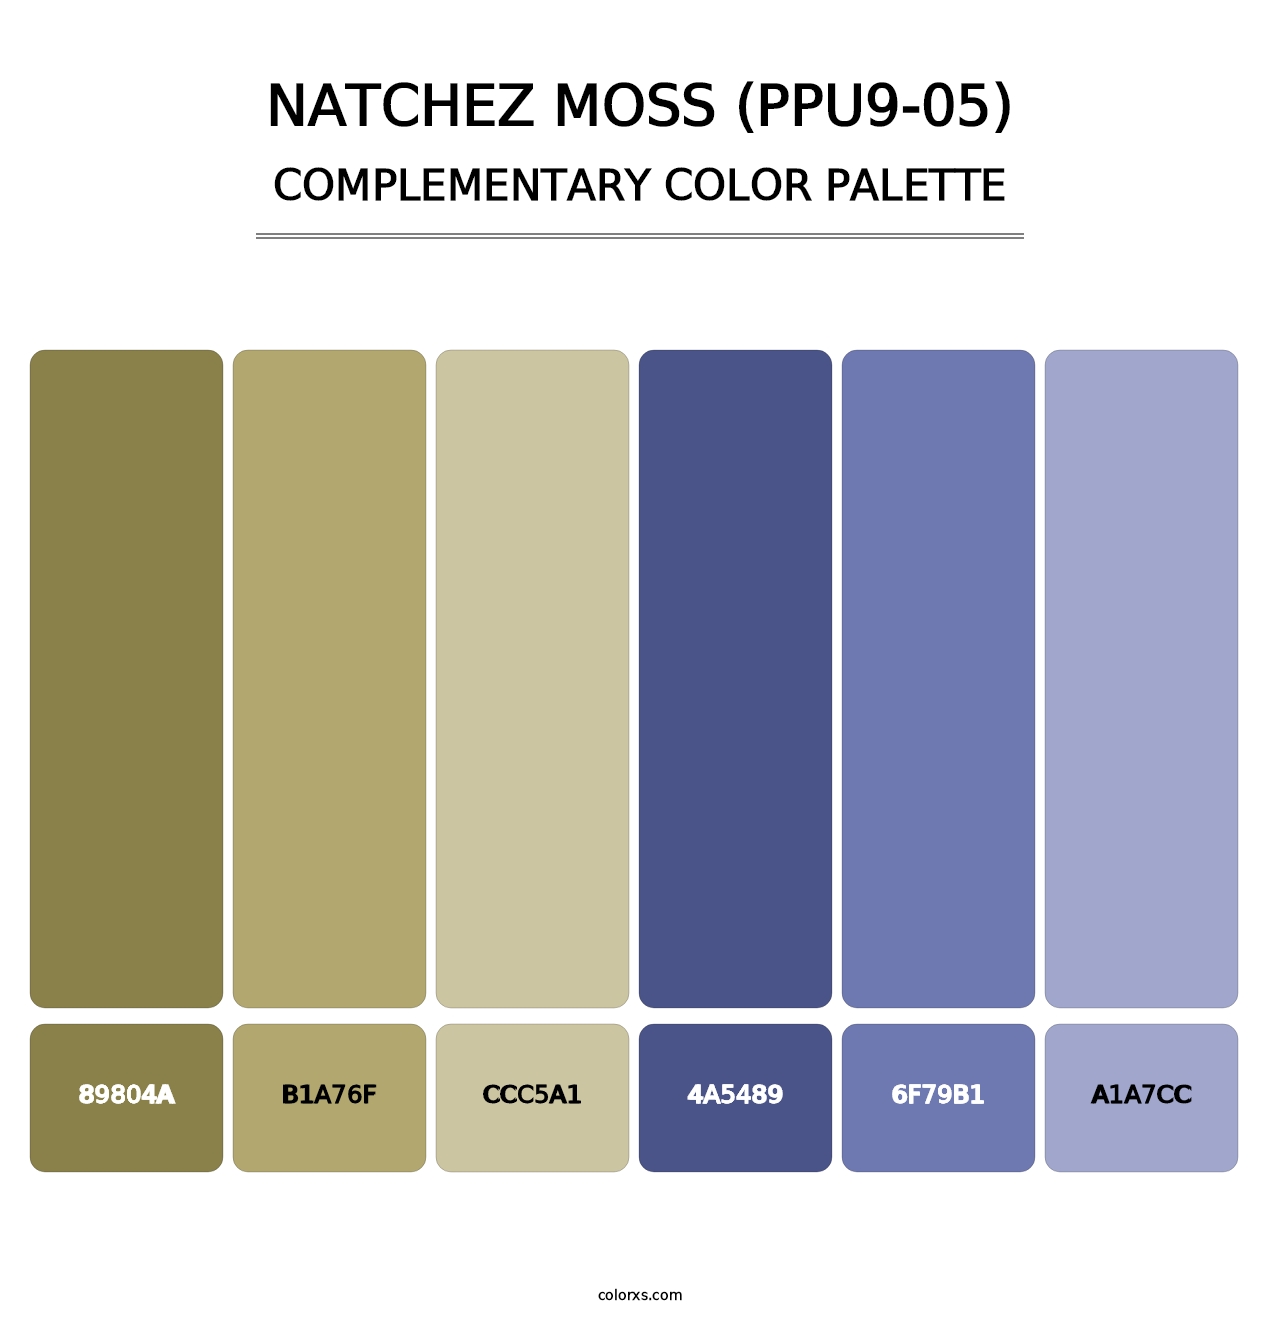 Natchez Moss (PPU9-05) - Complementary Color Palette